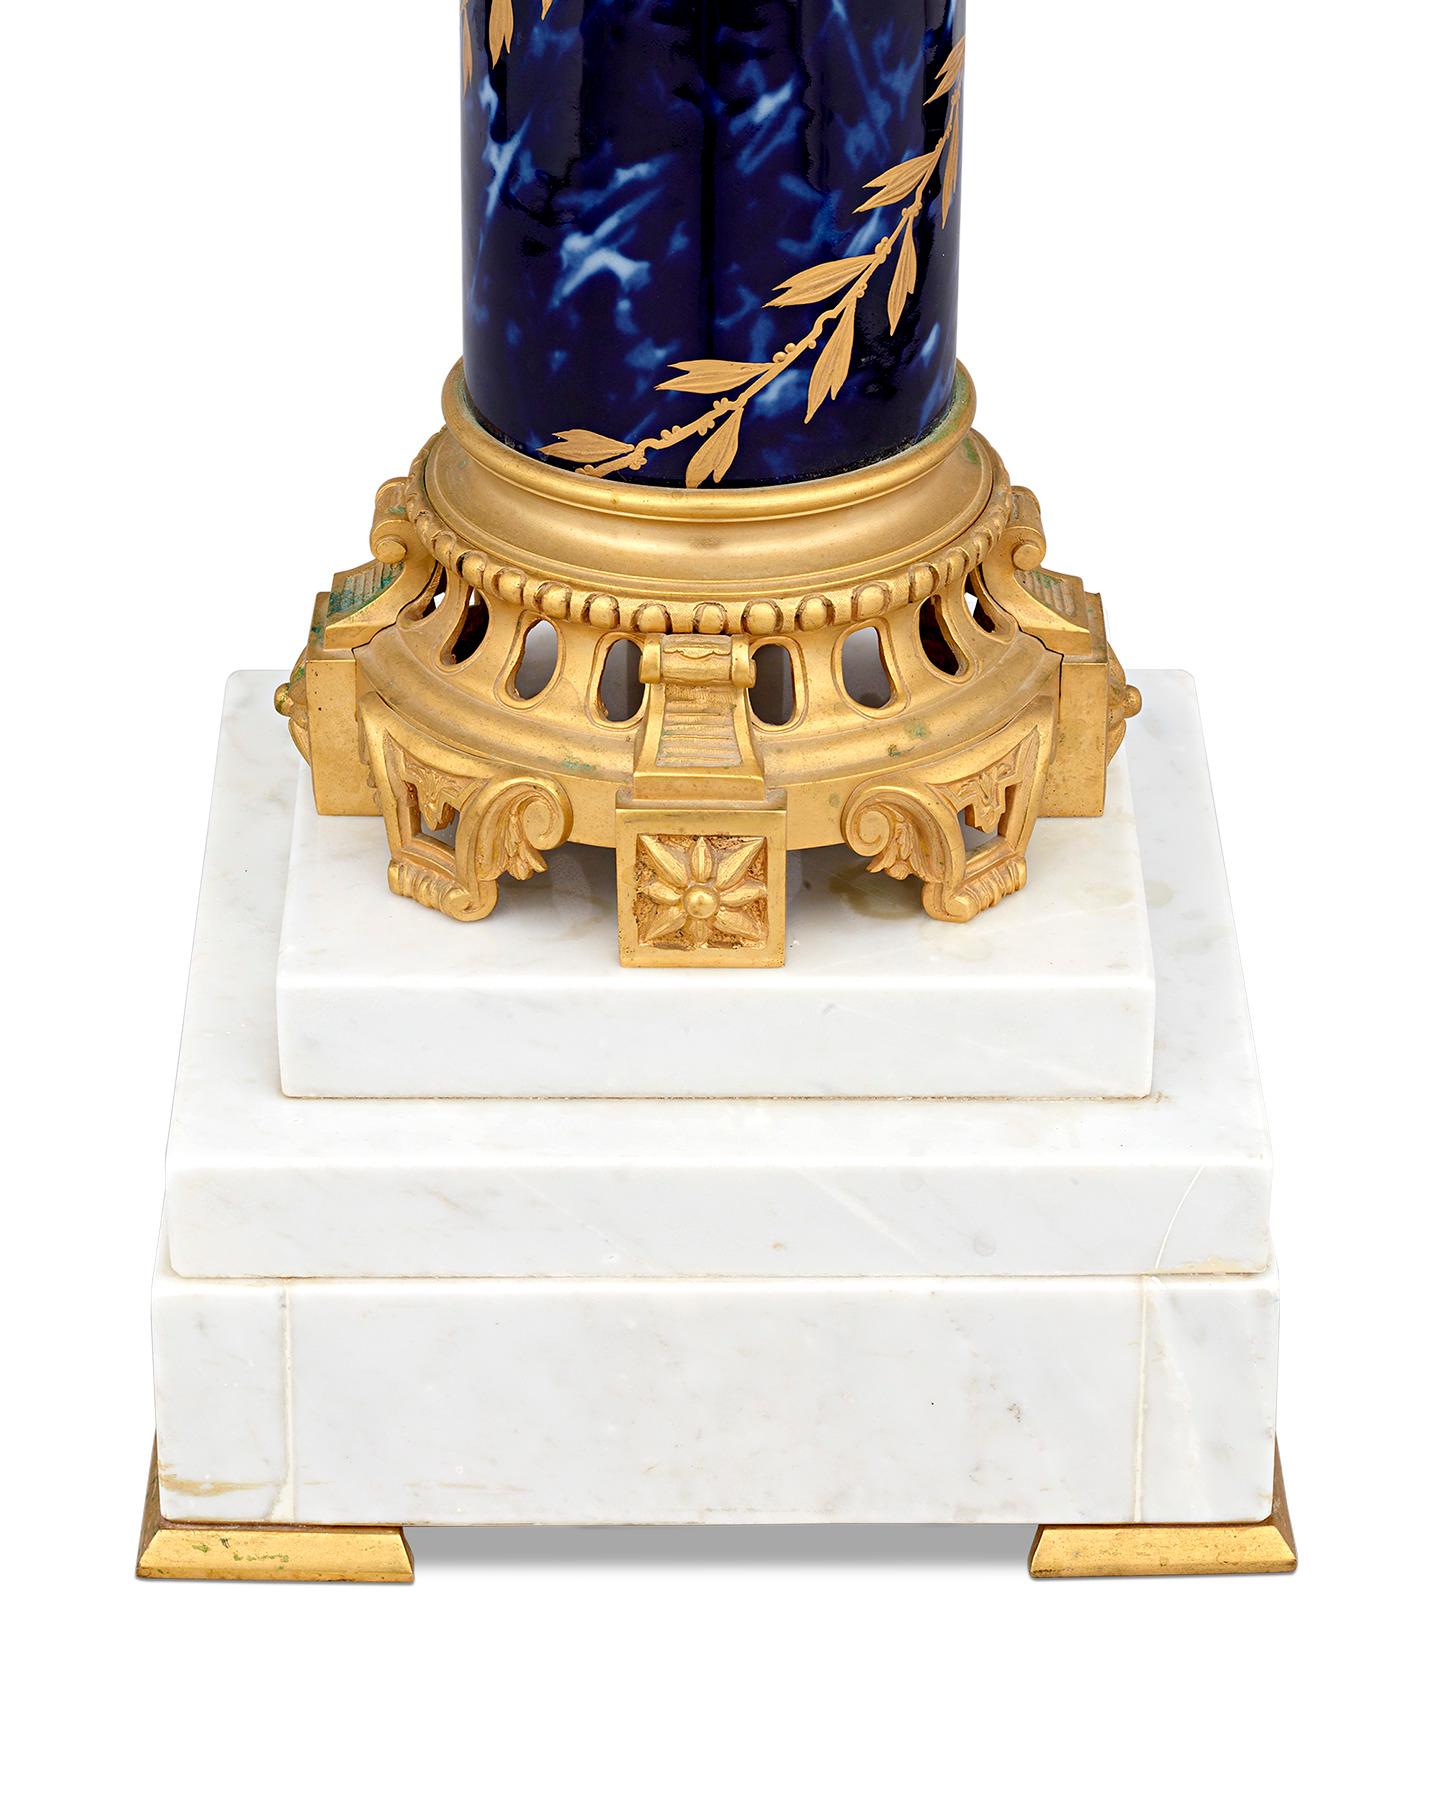 French Sèvres-Style Porcelain Pedestal For Sale